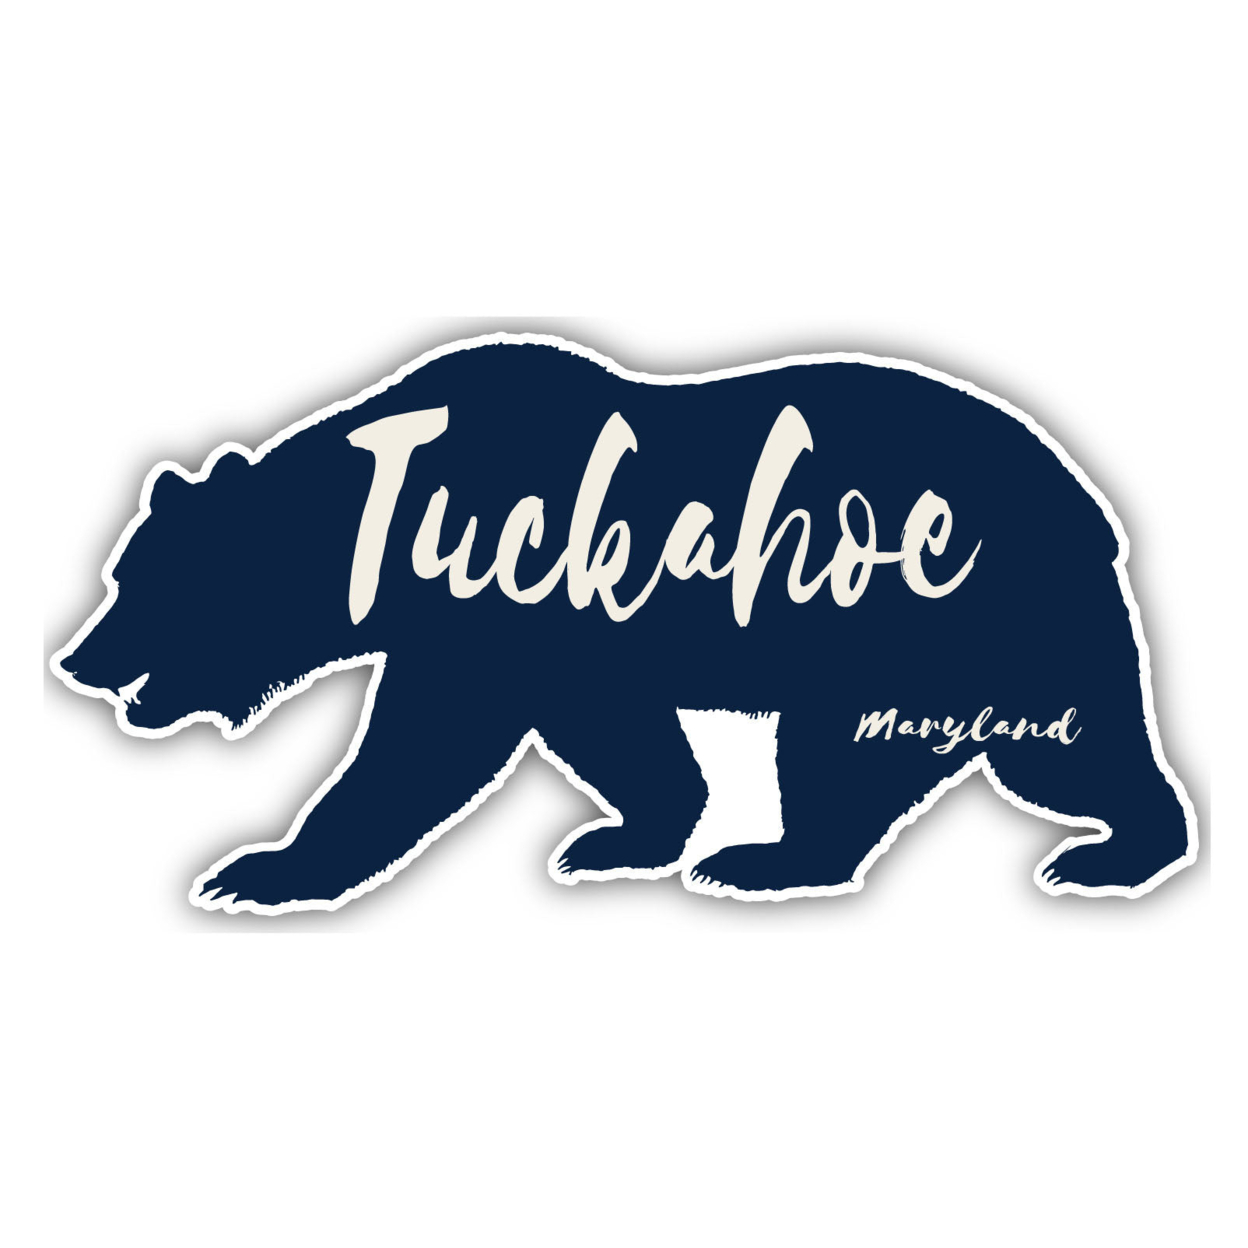 Tuckahoe Maryland Souvenir Decorative Stickers (Choose Theme And Size) - Single Unit, 2-Inch, Bear